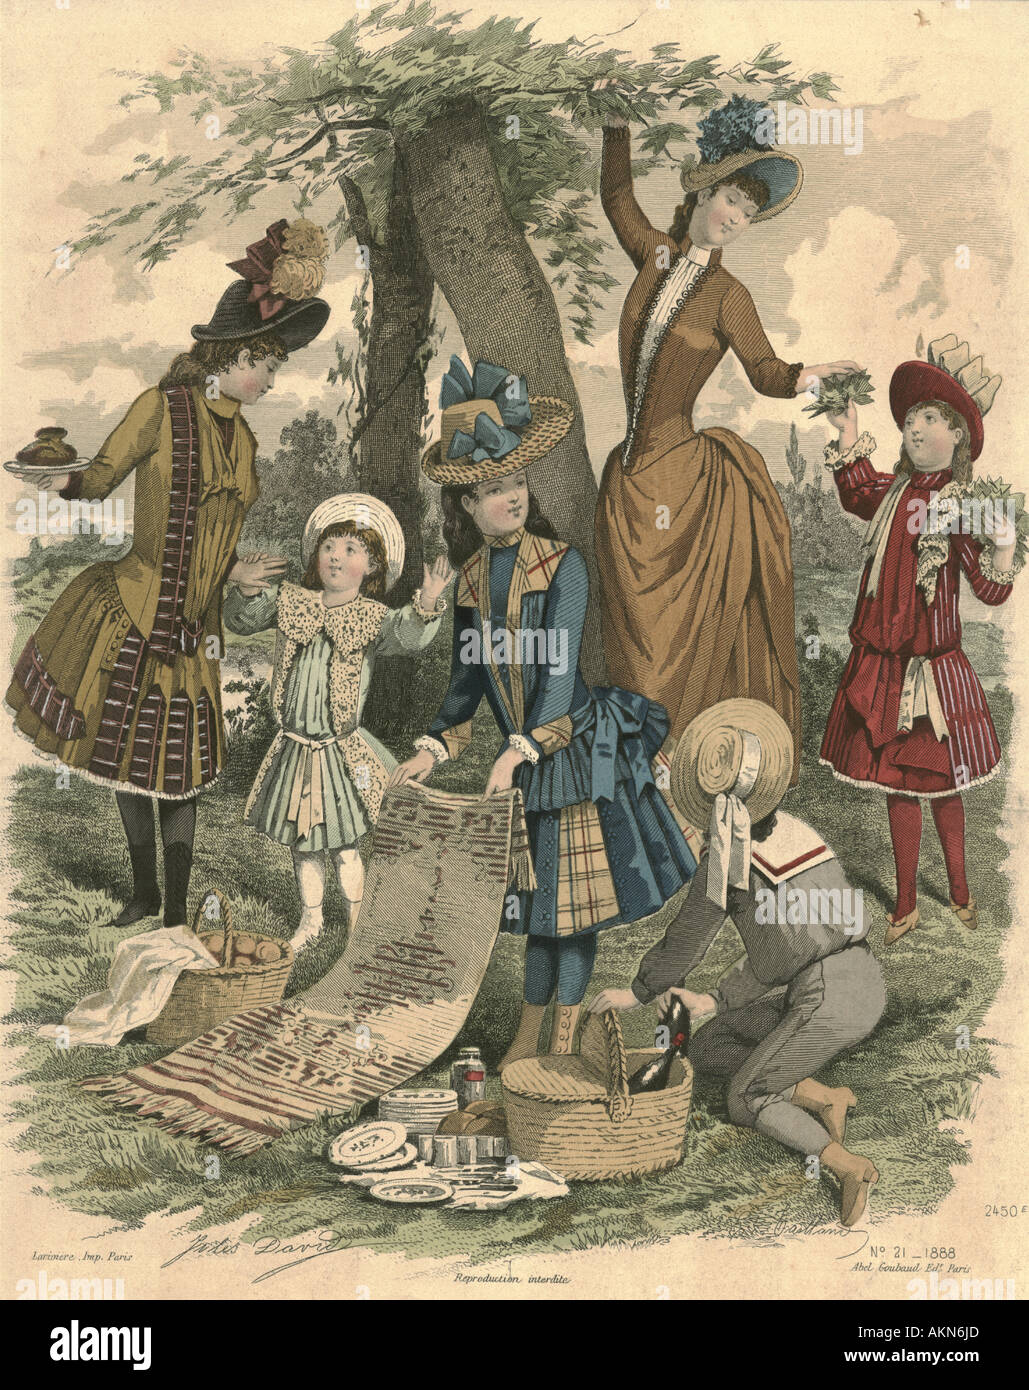 Mode-Platte von Jules David 1888 mit Picknick-Szene Stockfoto